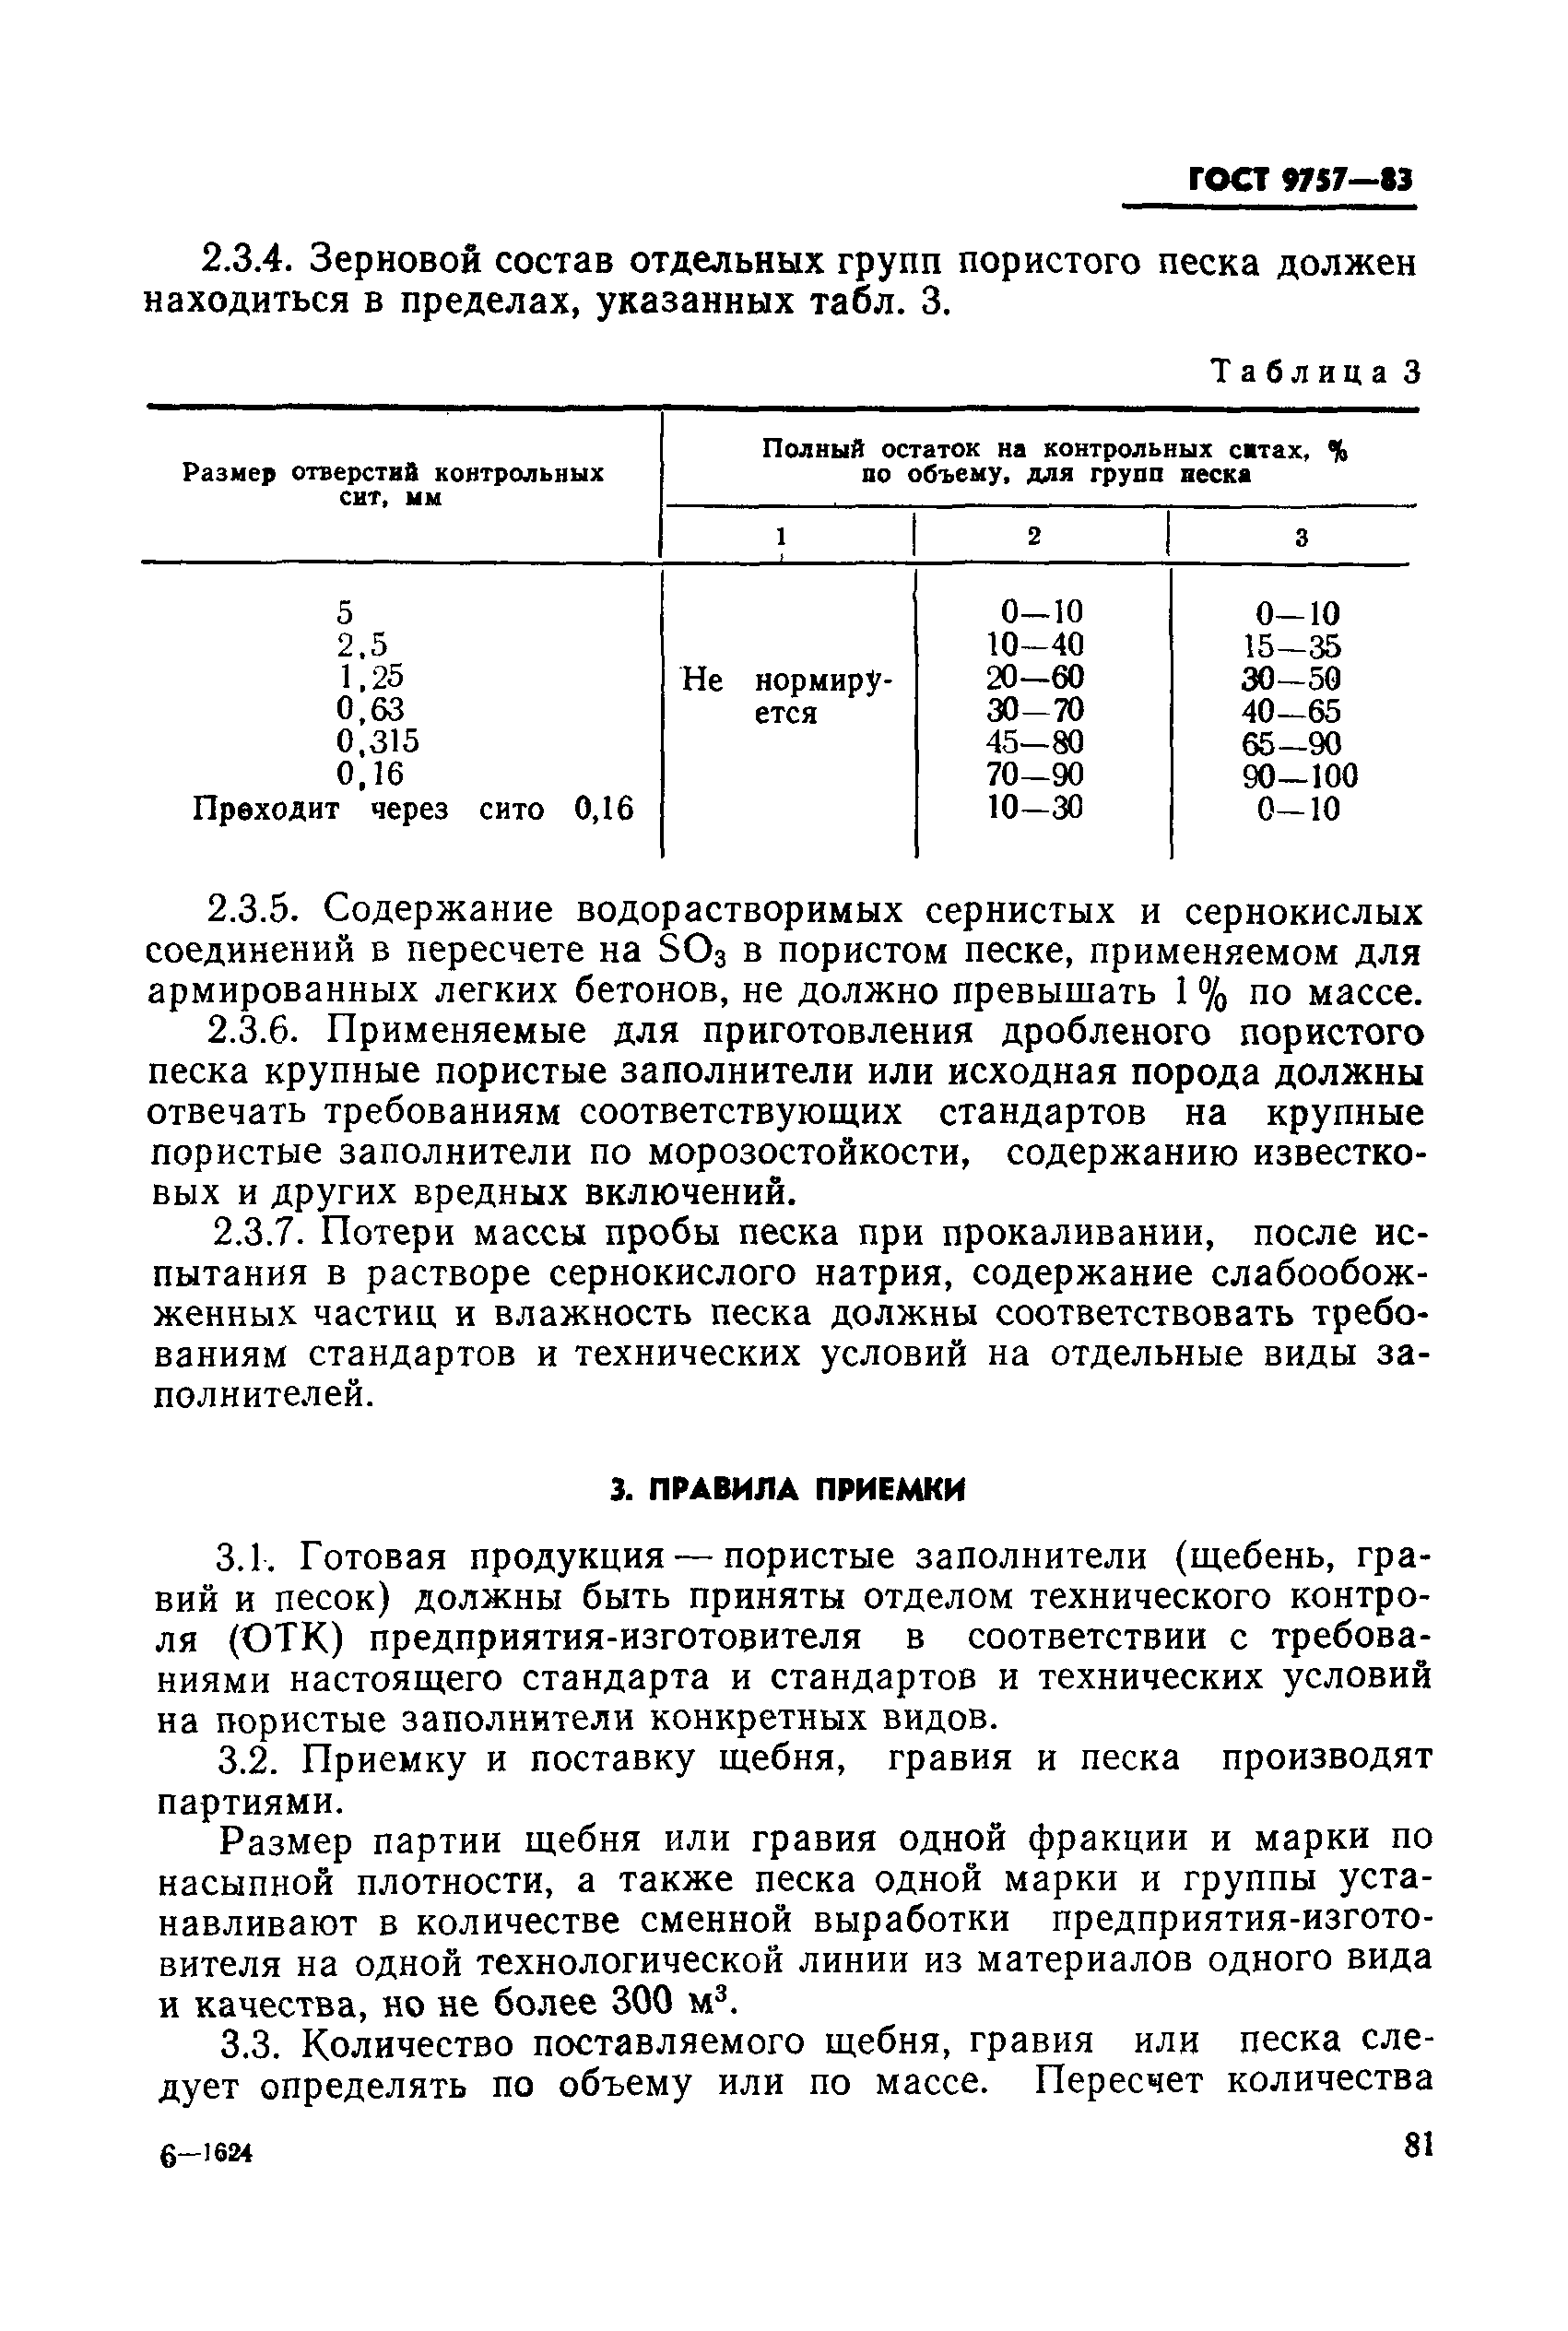 ГОСТ 9757-83